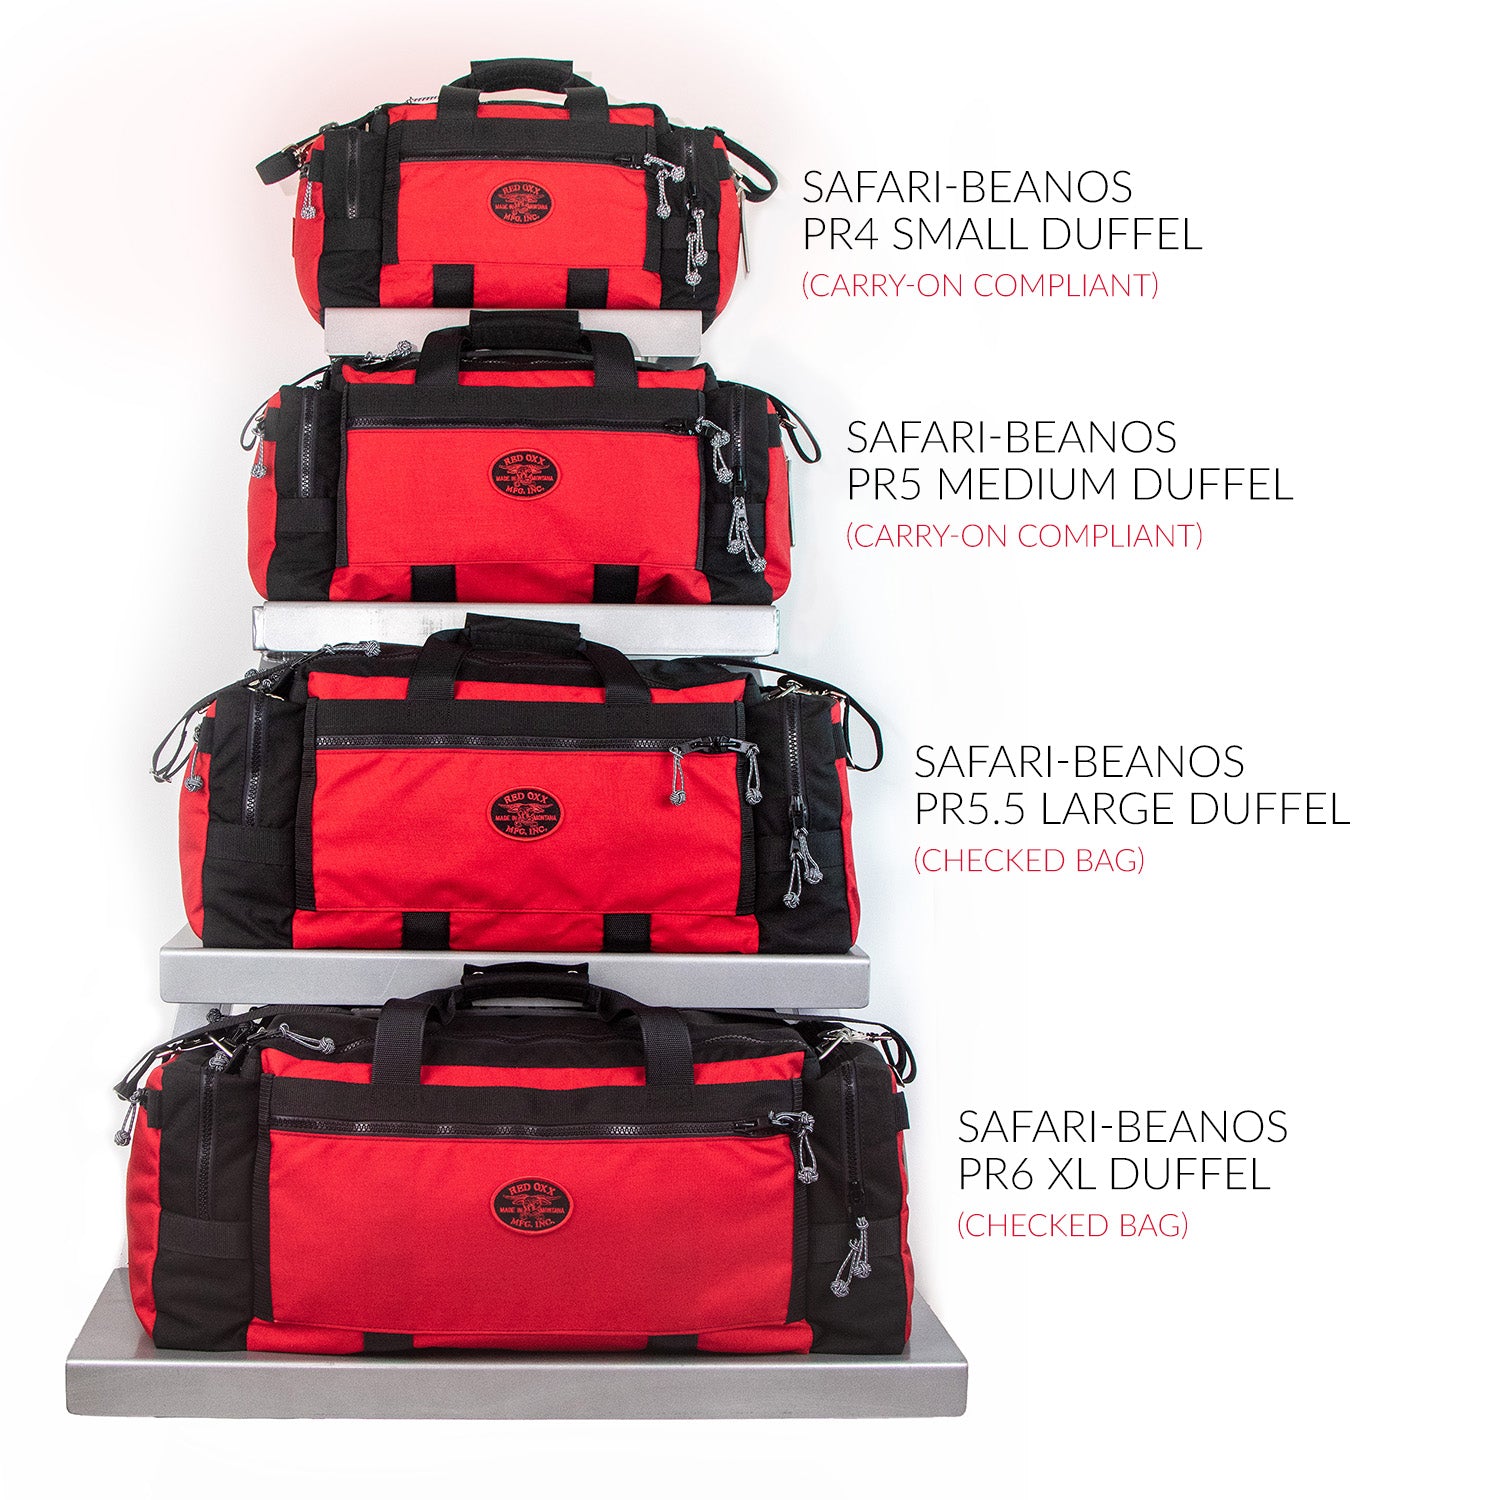 From the top PR 4 Safari Beano Carry on bag, PR 5 Safari Beano Carry on duffle, PR5.5 Safari Beano checked bag, PR6.0 Safari Beano checked bag.